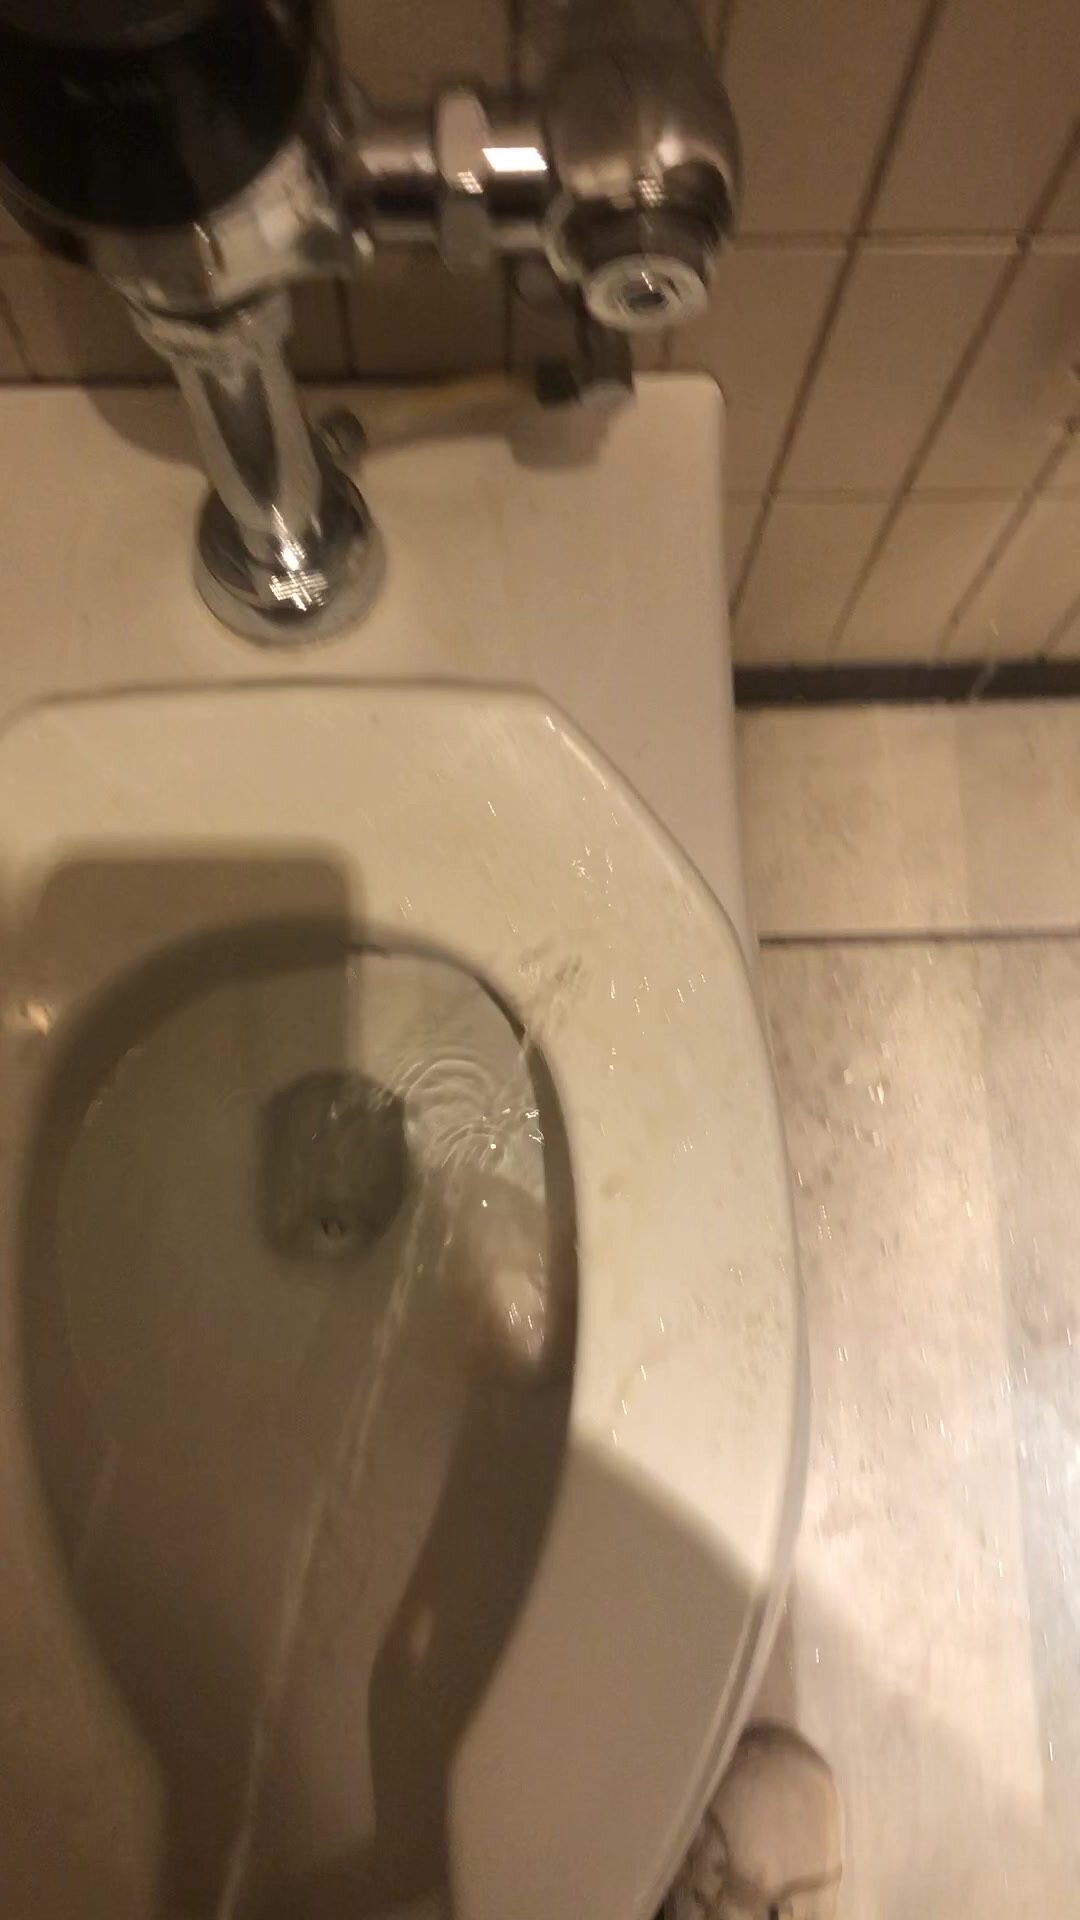 Pissmarking another mall toilet